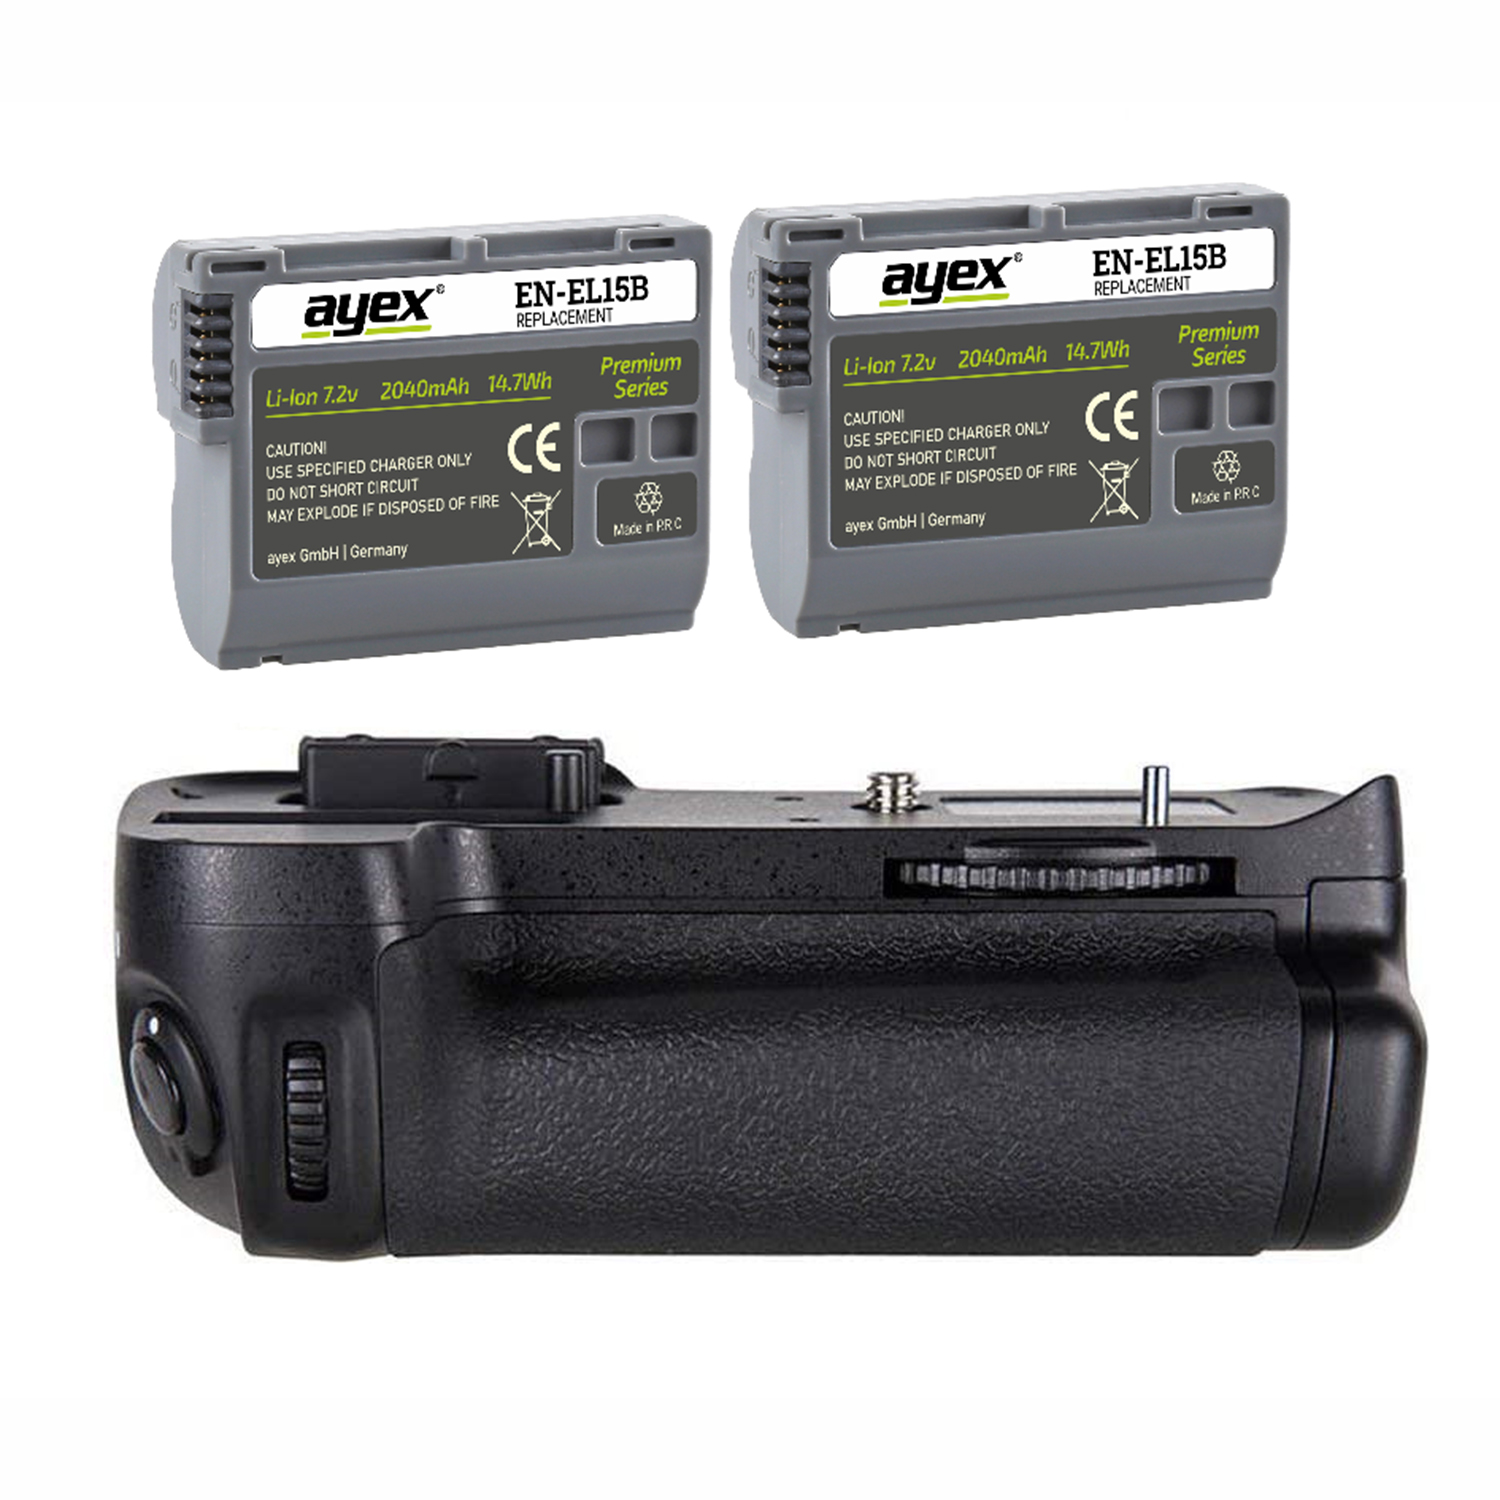 Akkus für + Nikon Batteriegriff 2x wie Batteriegriff Set Set, Schwarz EN-EL15B MB-D11, D7000 AYEX